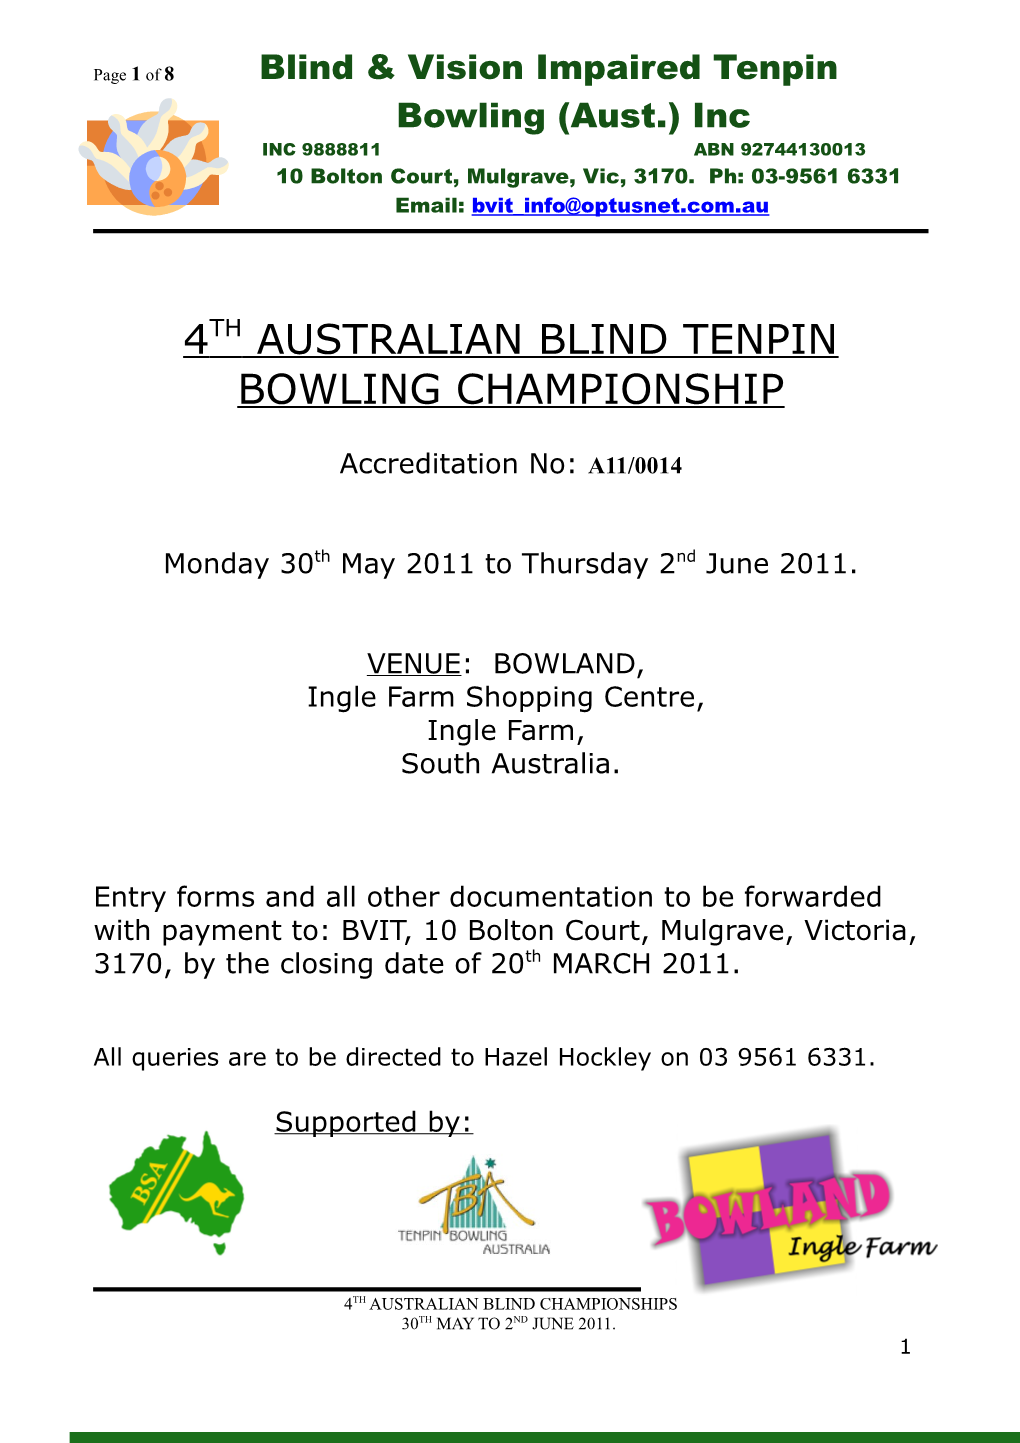 4Th Australian Blind Tenpin Bowling Championship